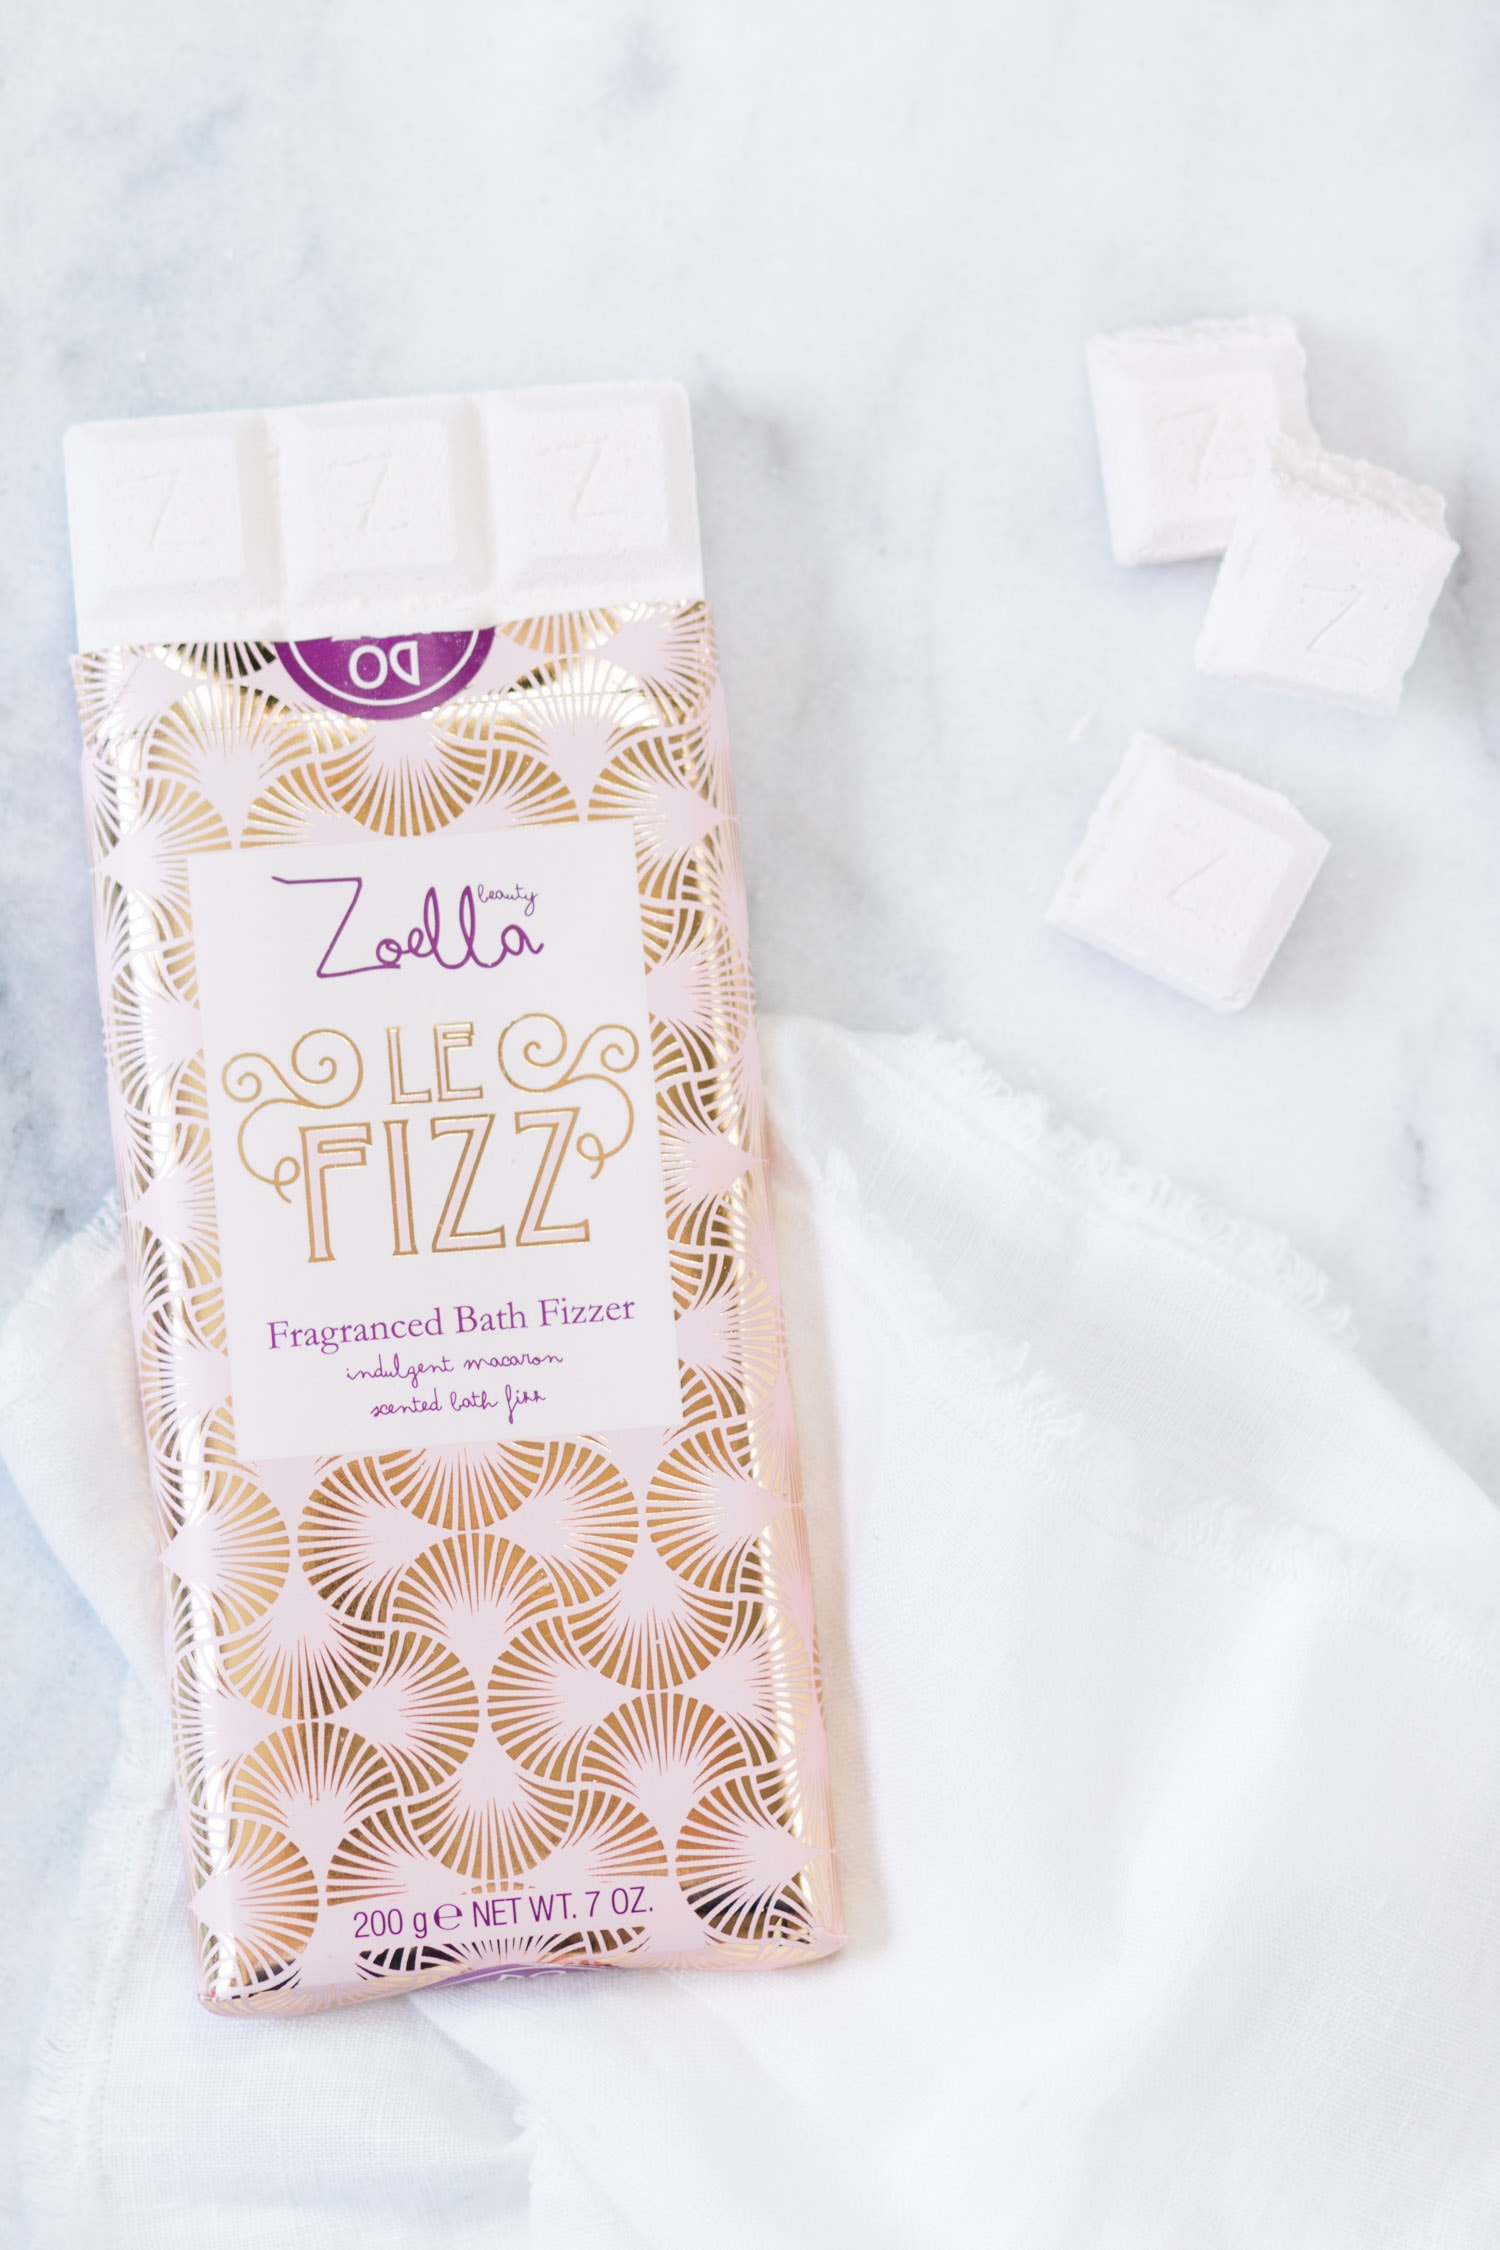 Zoella Beauty Sweet Inspirations |  Le Fizz Fragranced Bath Fizzer Review | beauty blogger Ashley Brooke Nicholas